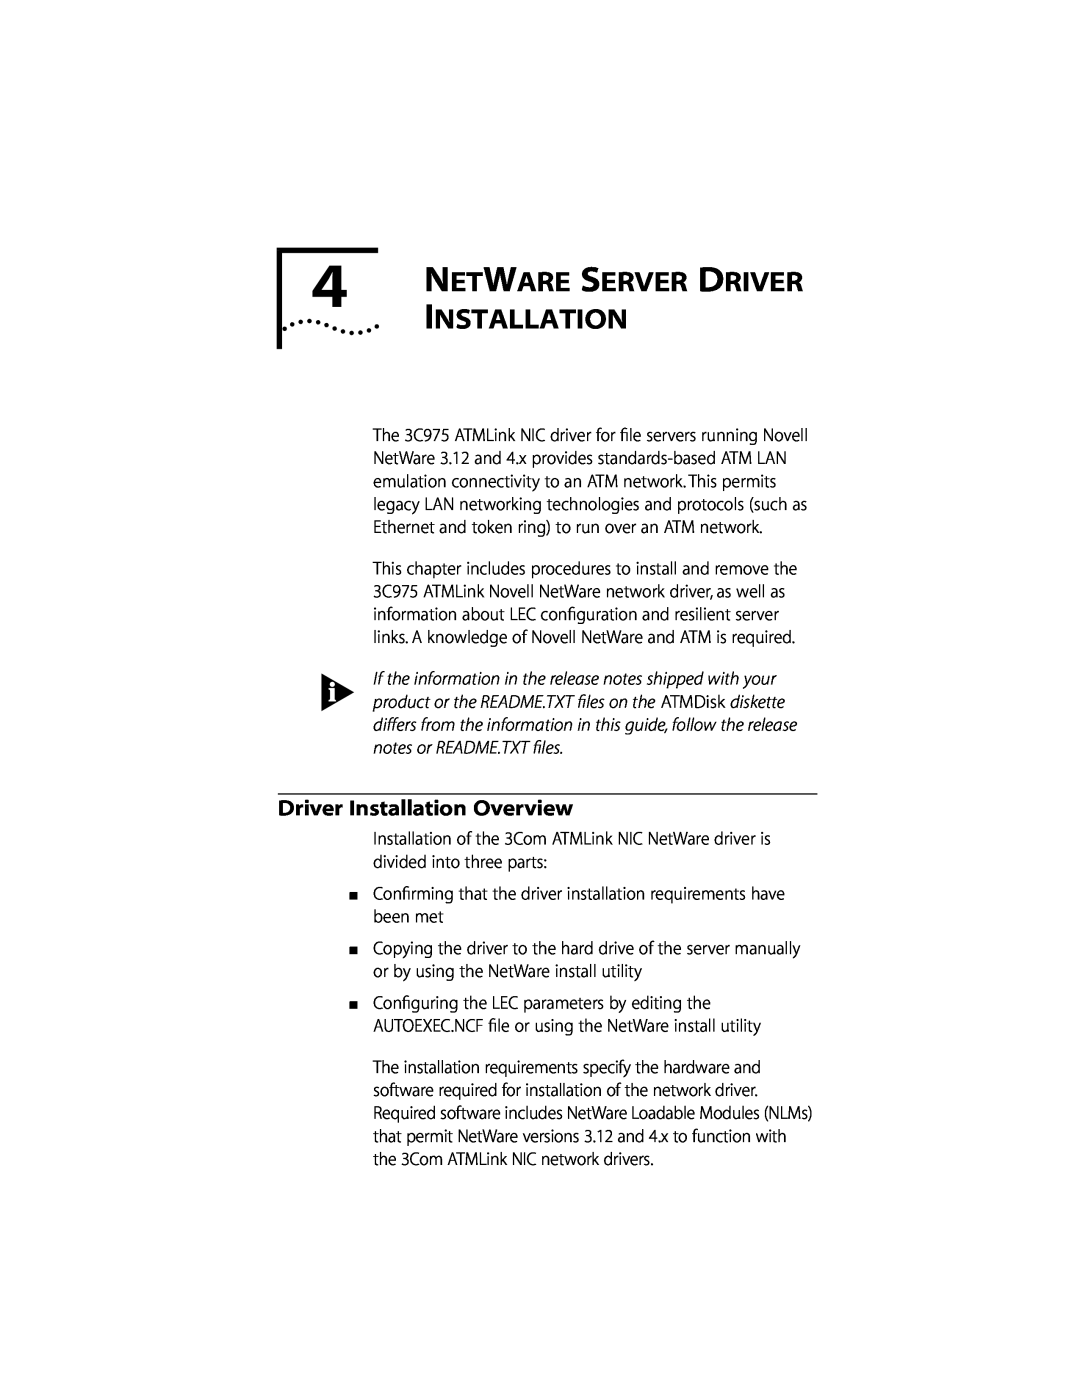 3Com 155 PCI manual Net Ware Server Driver, Driver Installation Overview 